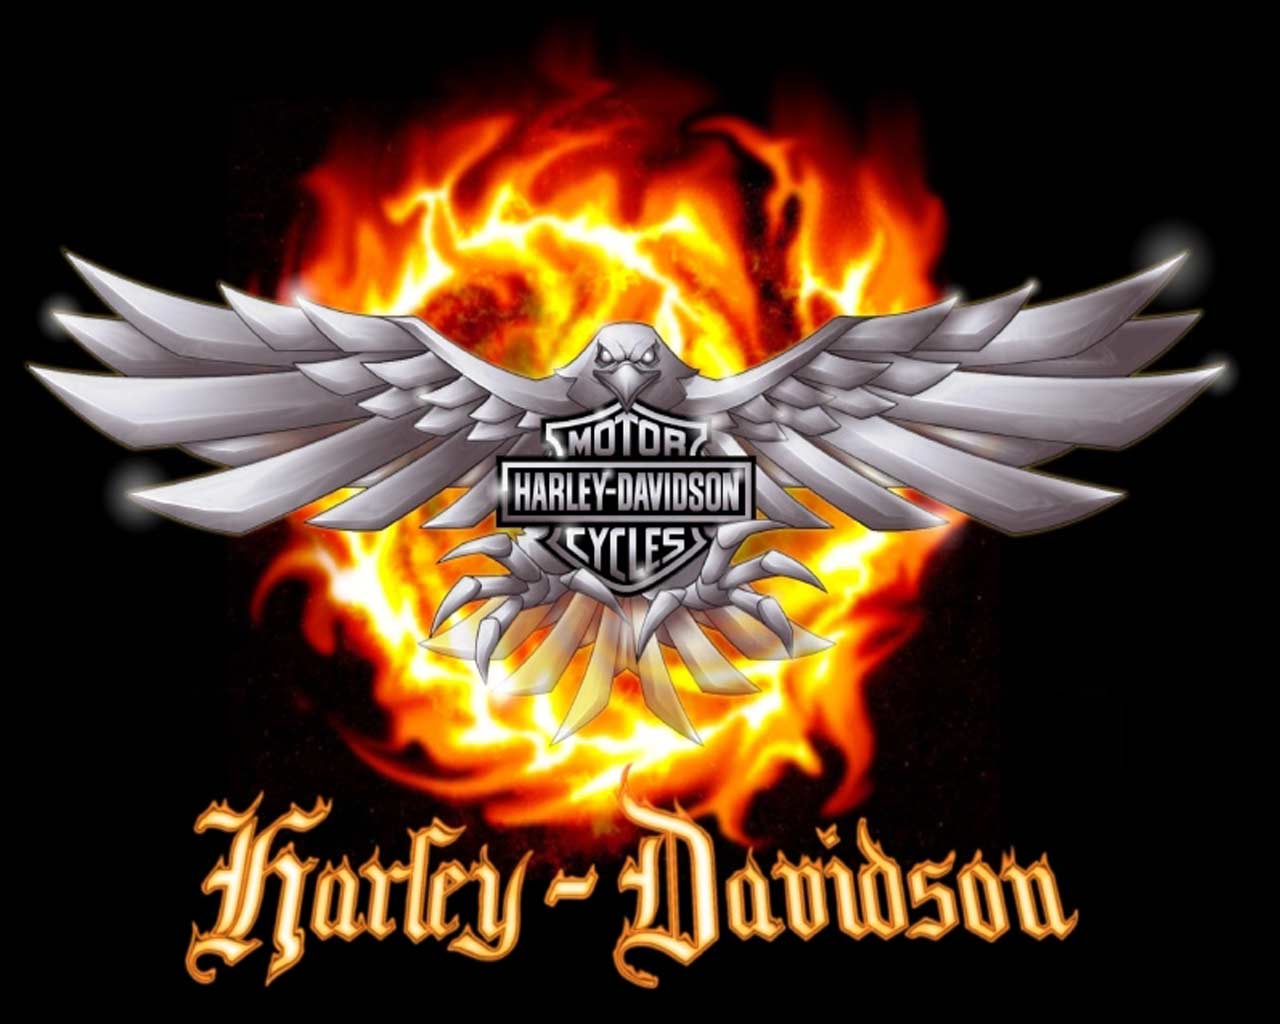 carta da parati logo harley davidson,fiamma,fuoco,calore,emblema,font